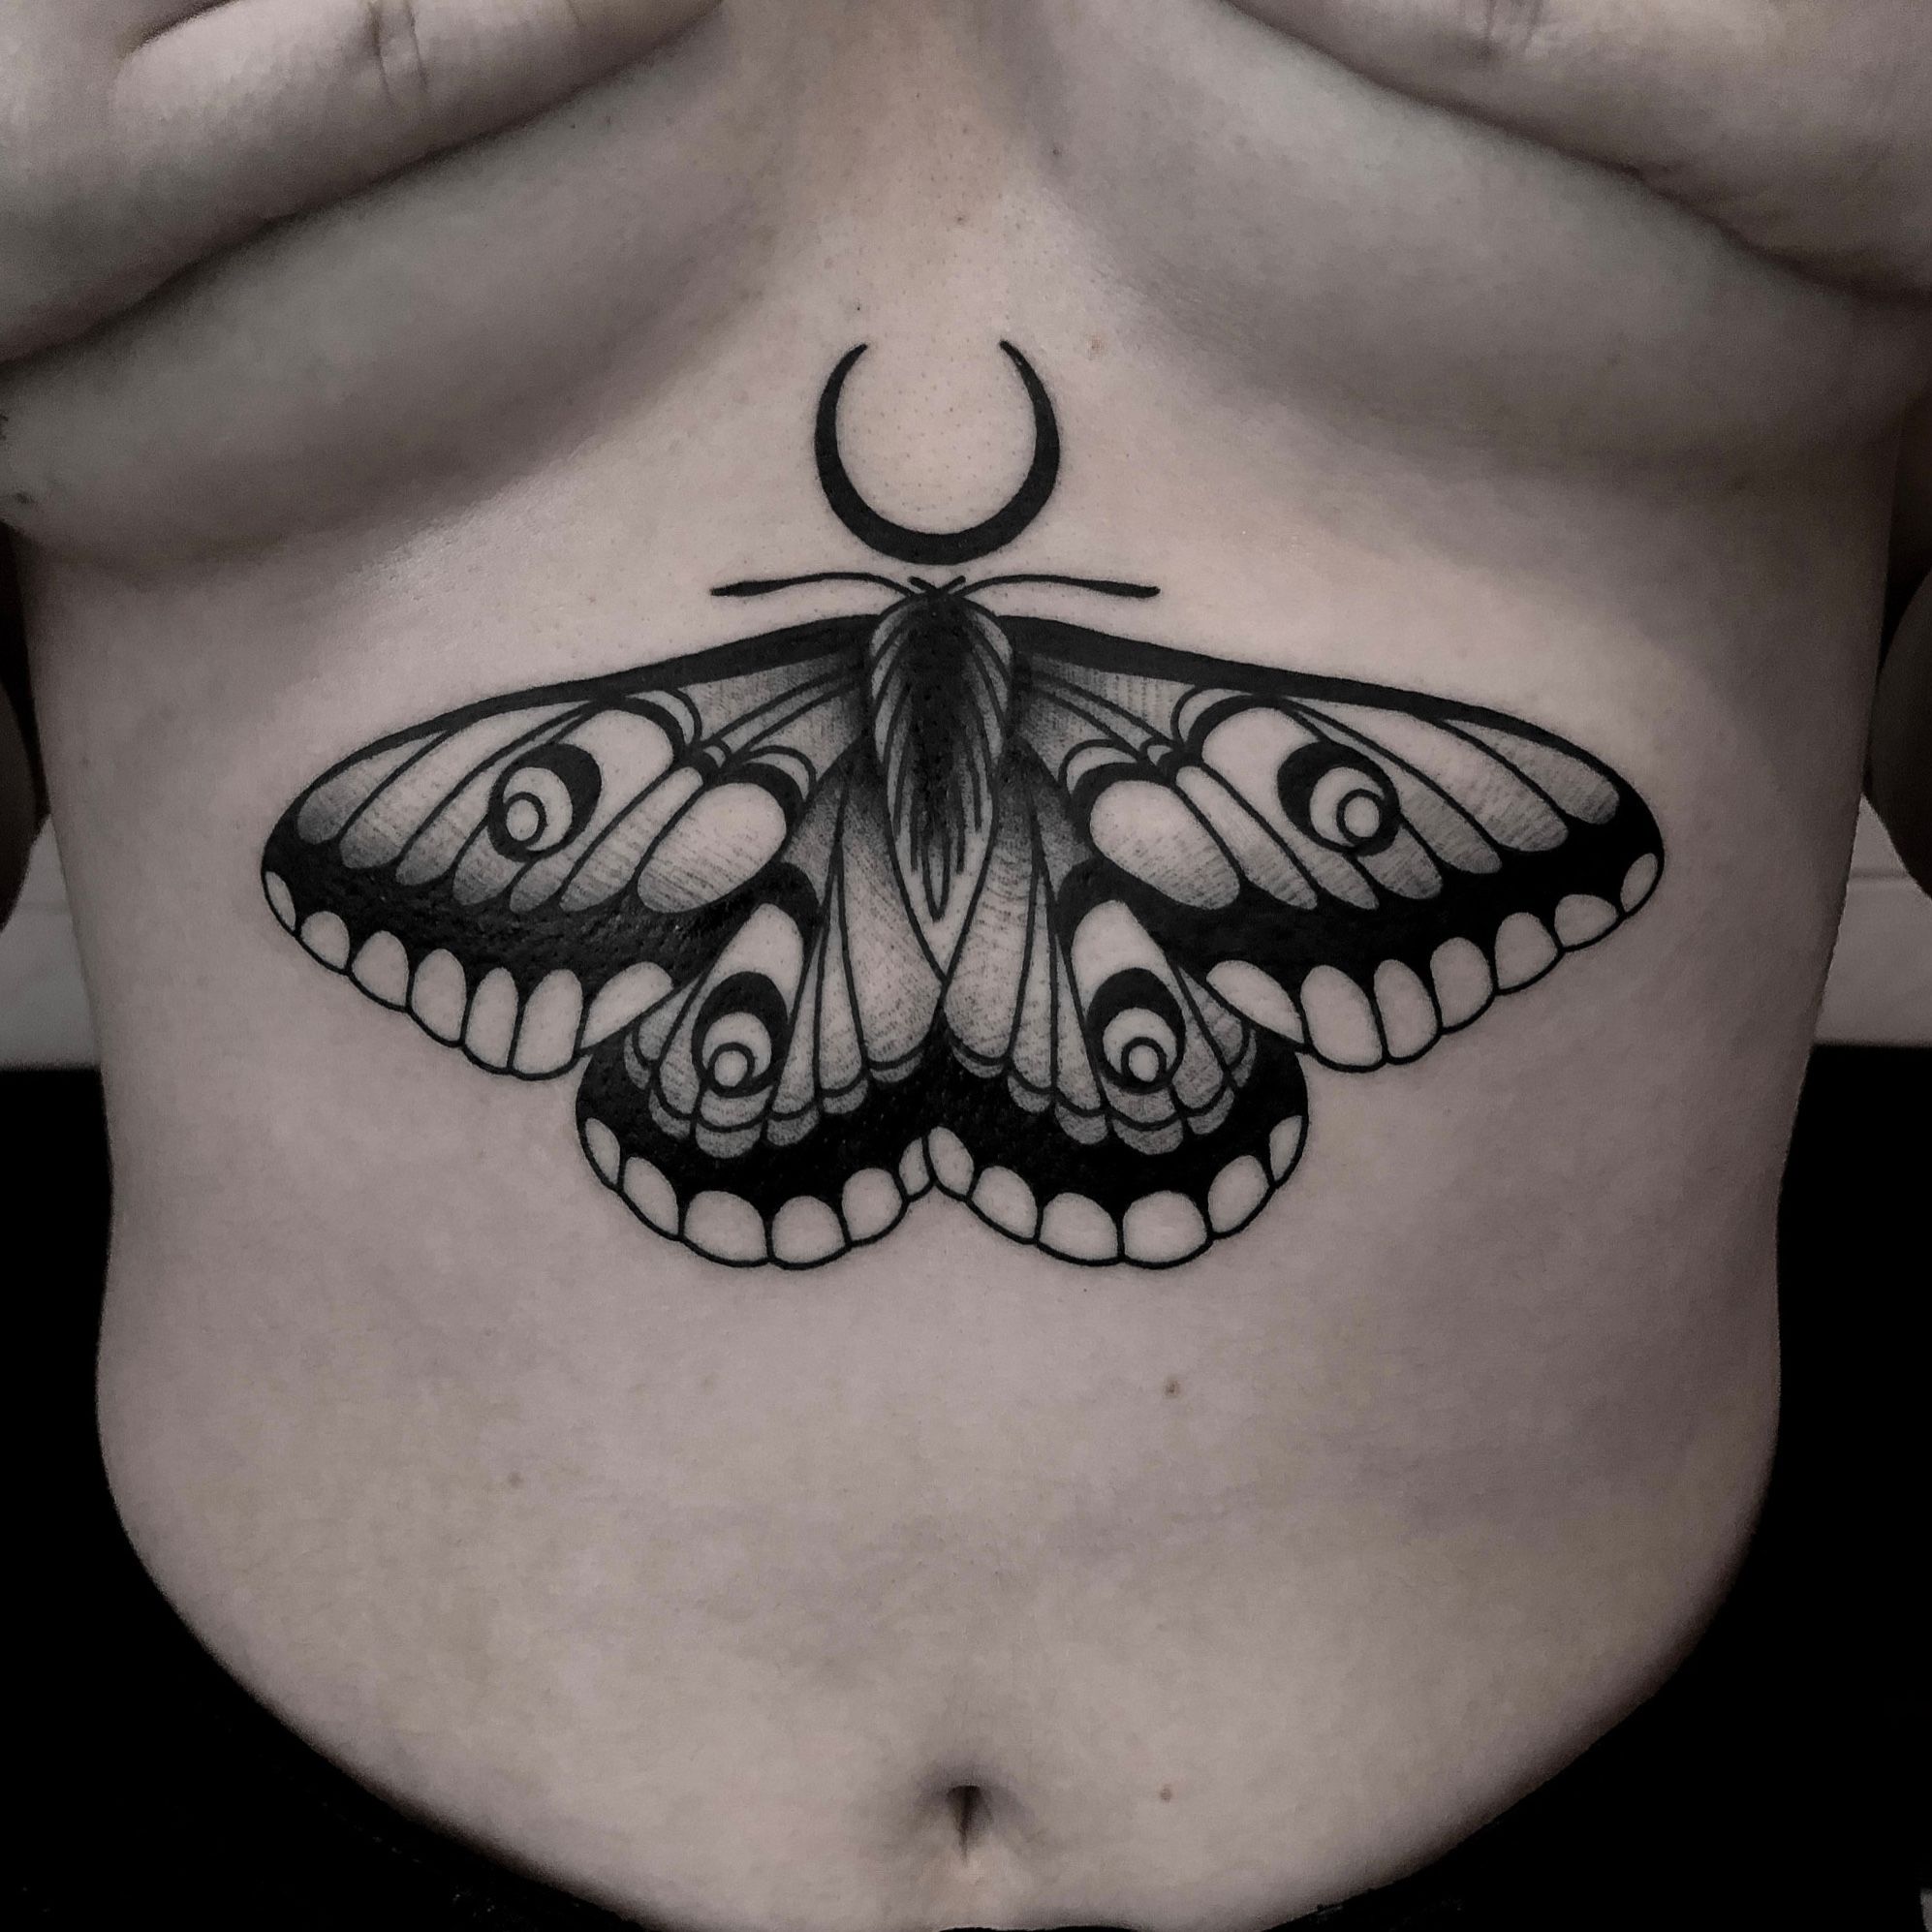 Moth stomach by matt at Remington tattoo in San Diego CA  rtattoos